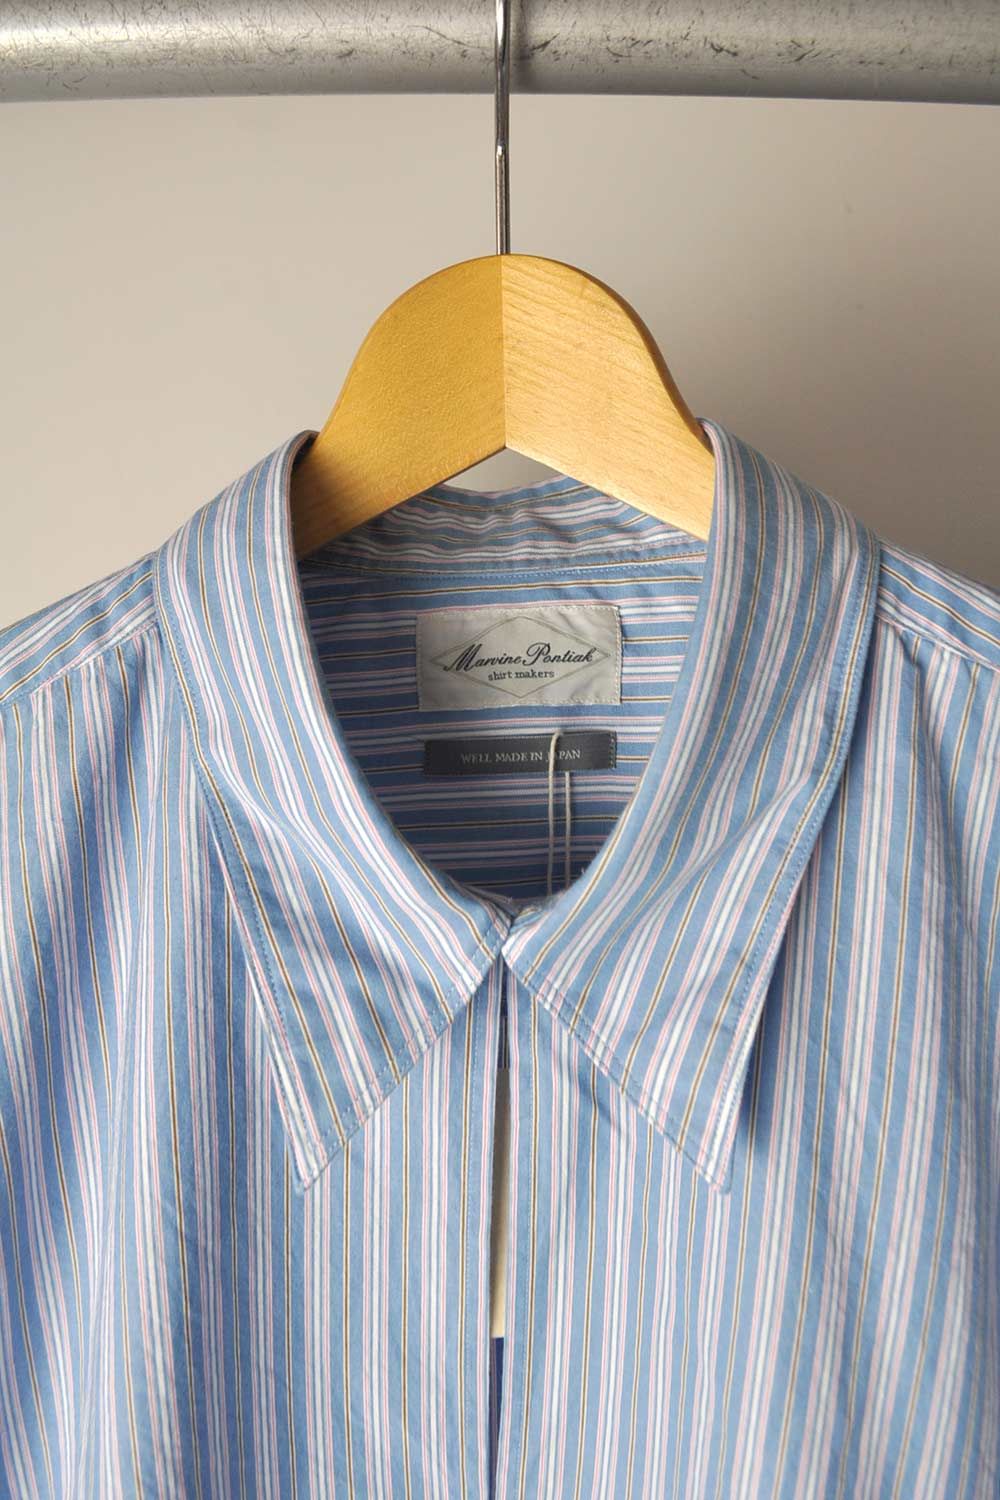 Marvine Pontiak Shirt Makers - Skipper SH | Stripe Online Store